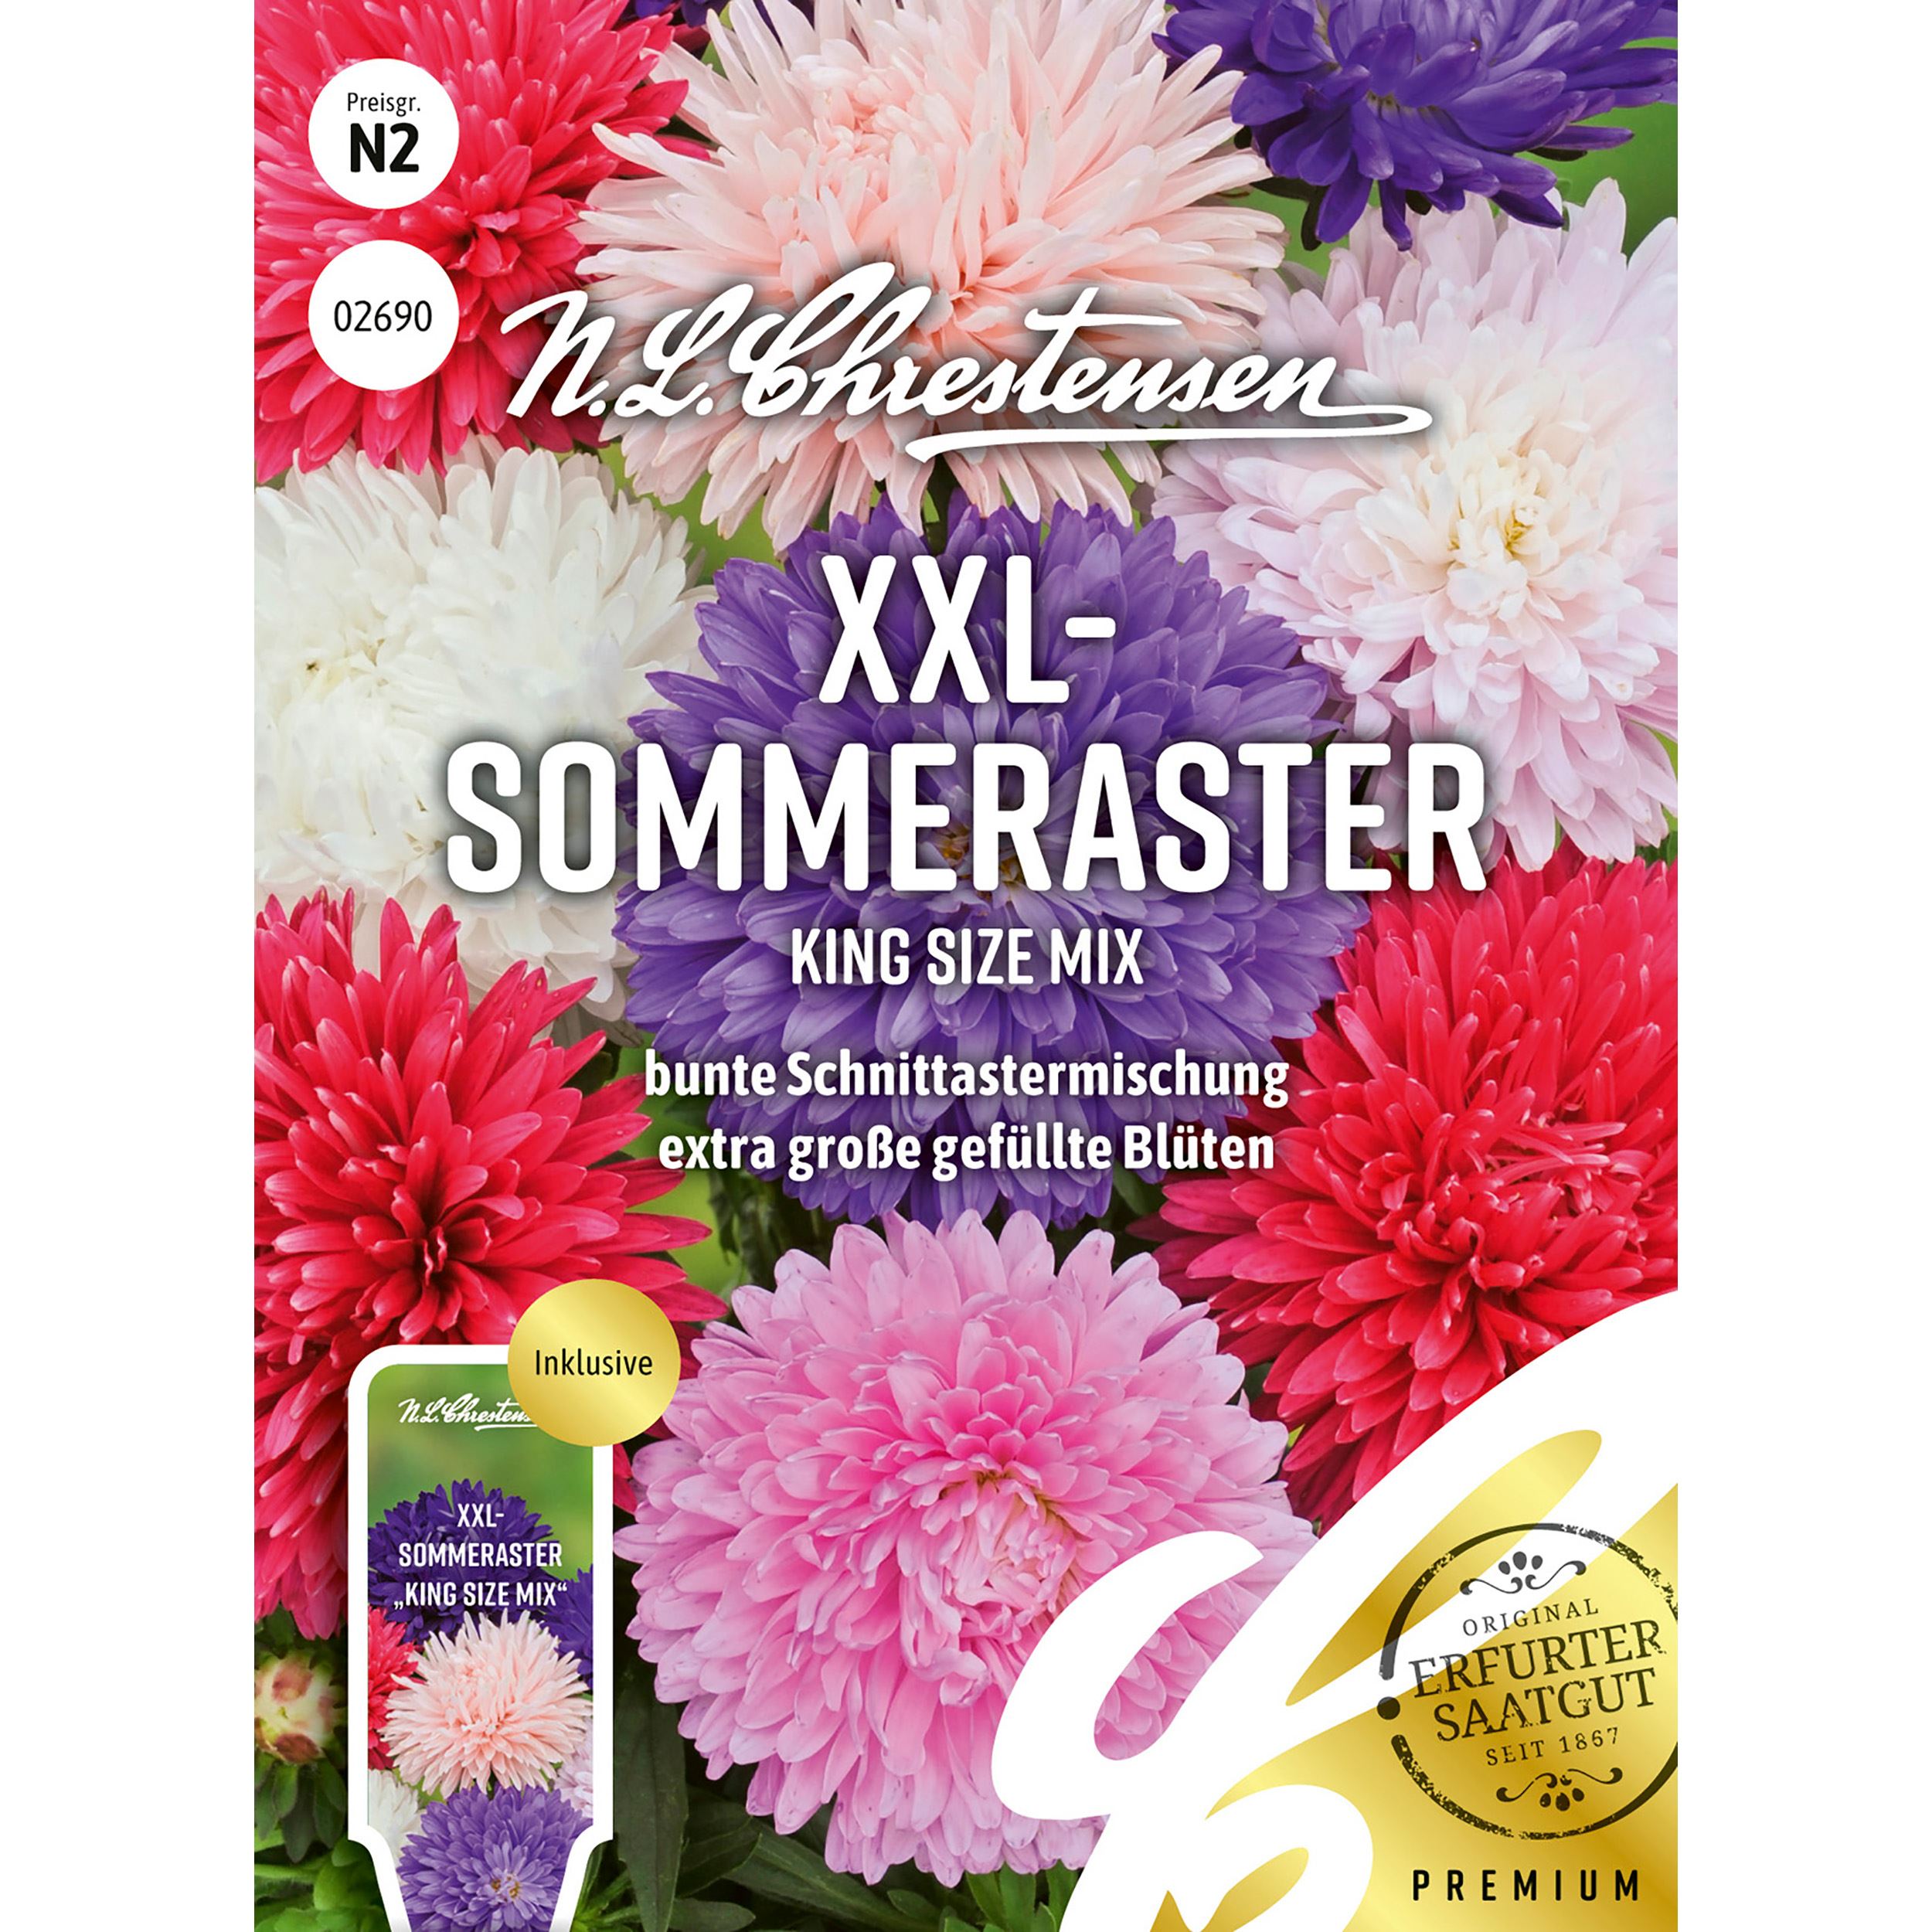 XXL-
Sommeraster King Size Mix